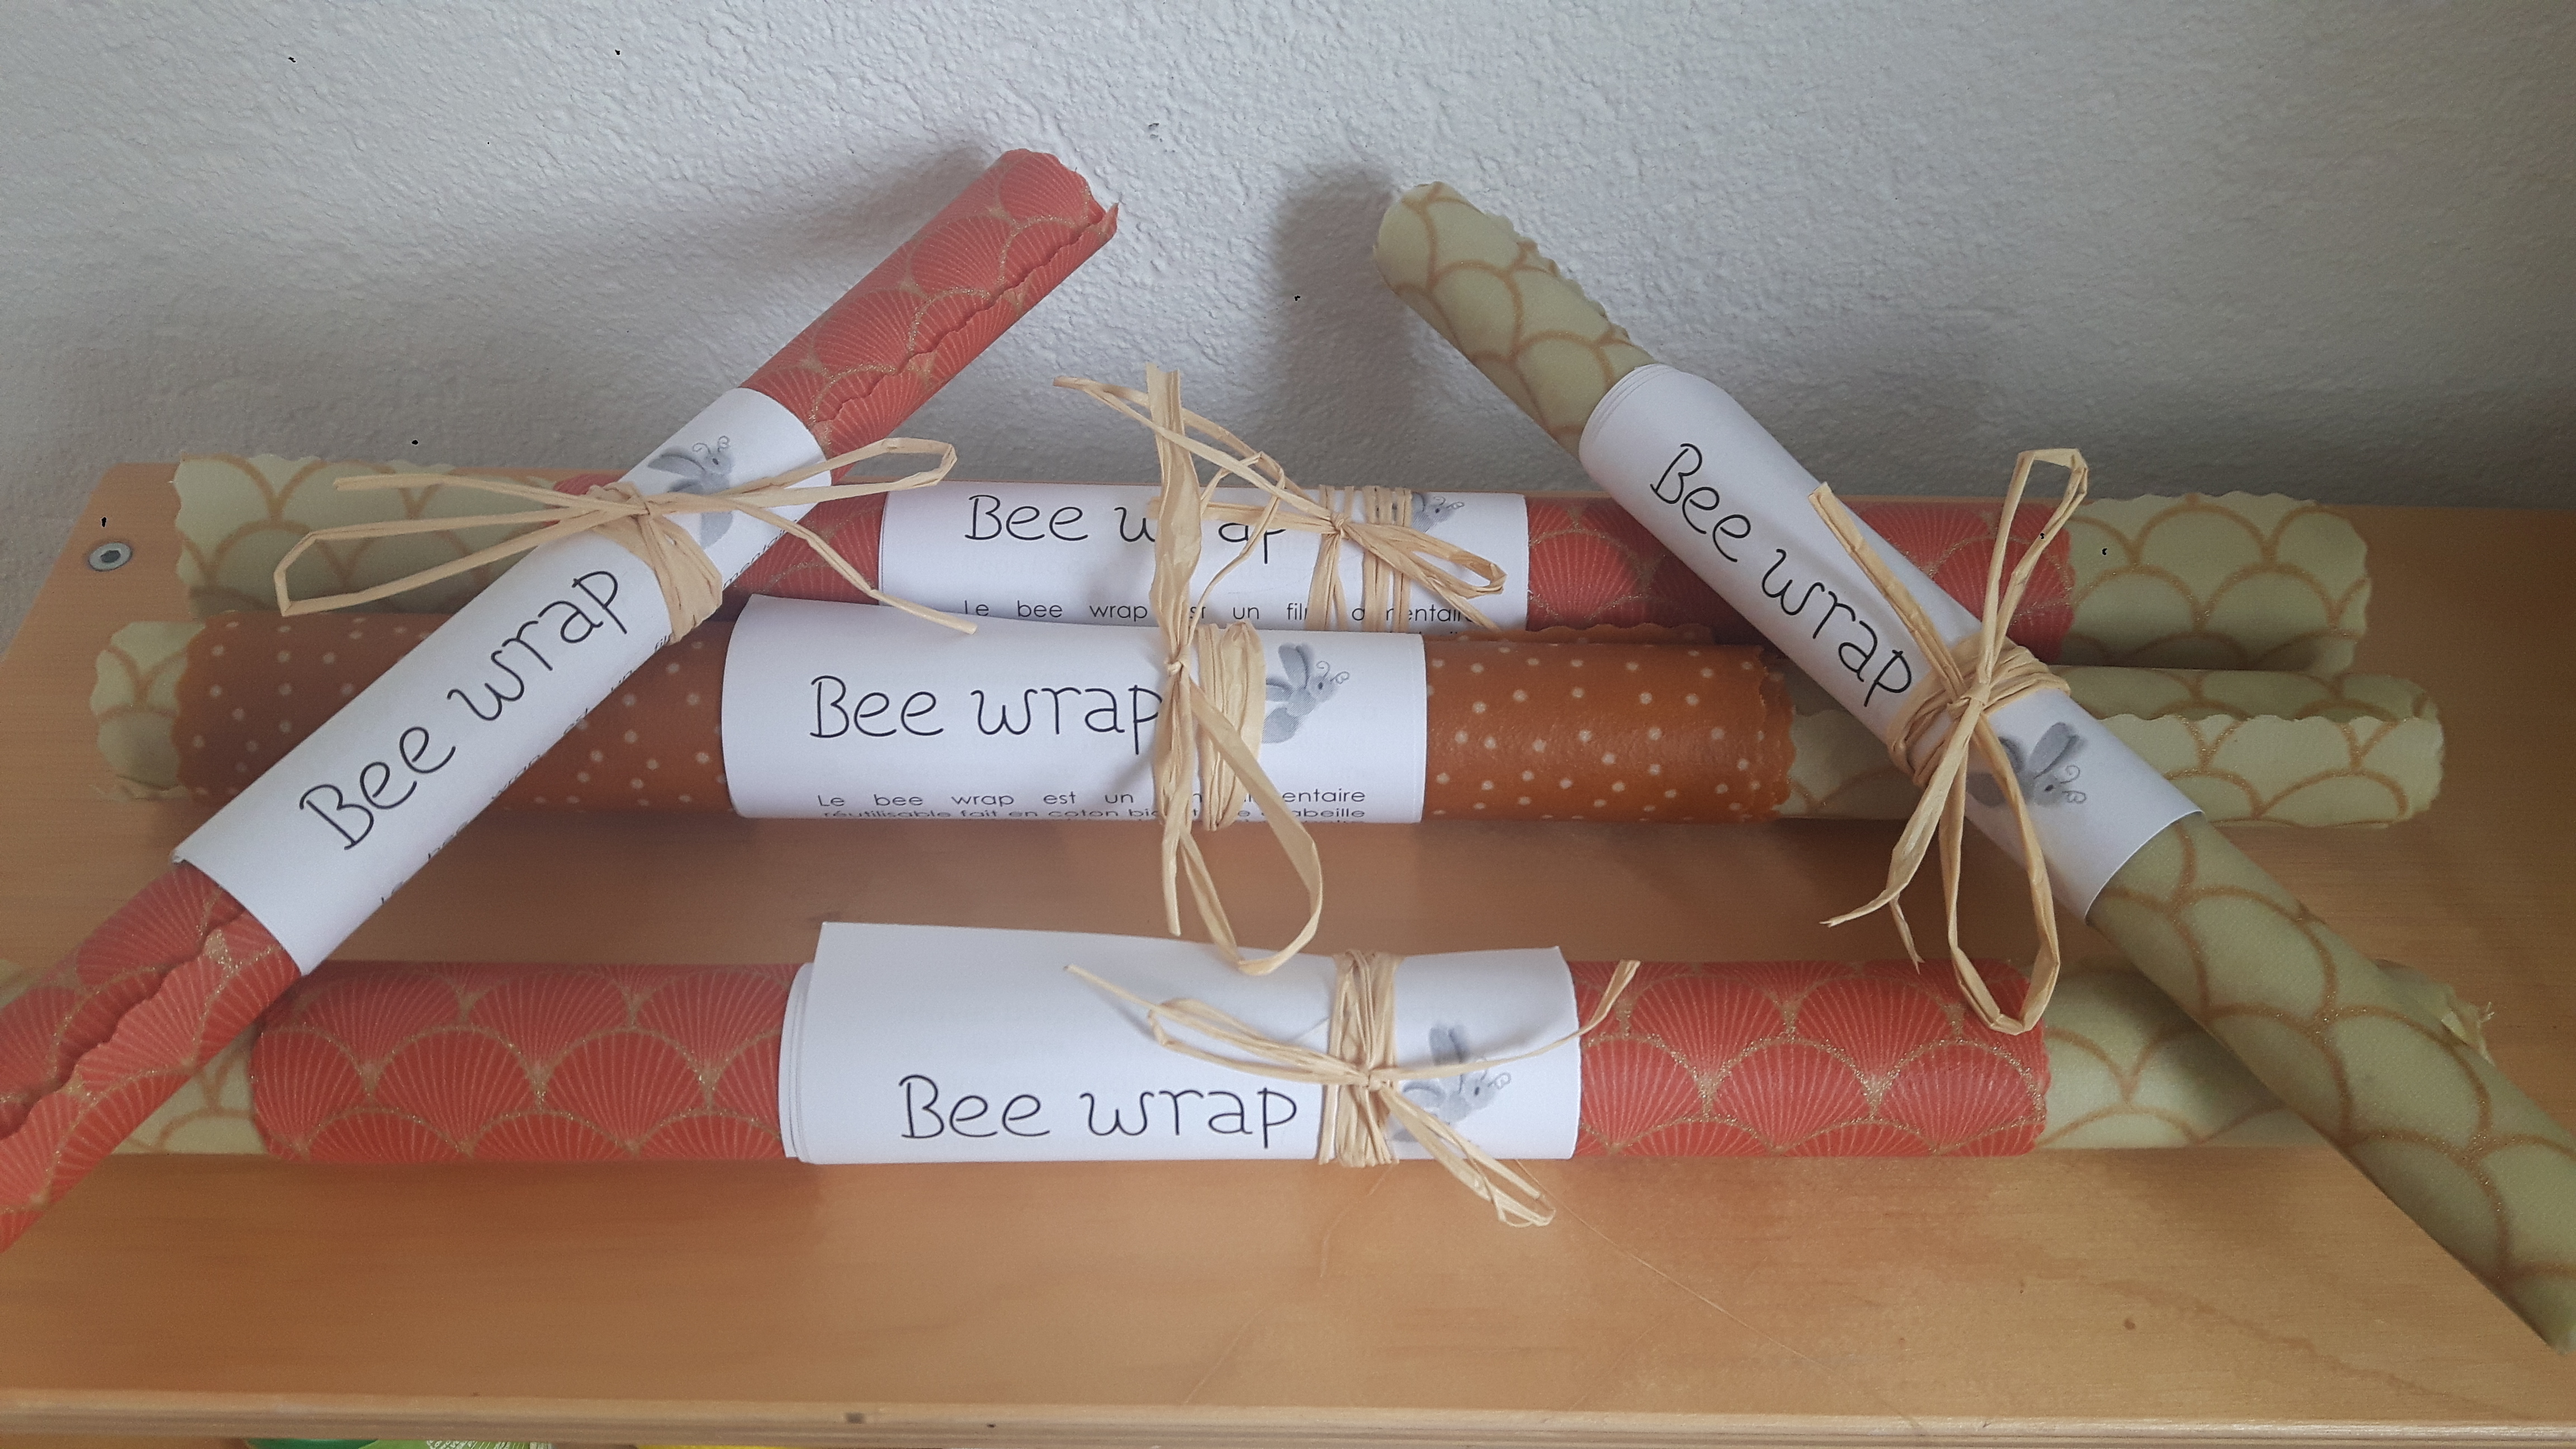 Bee wrap